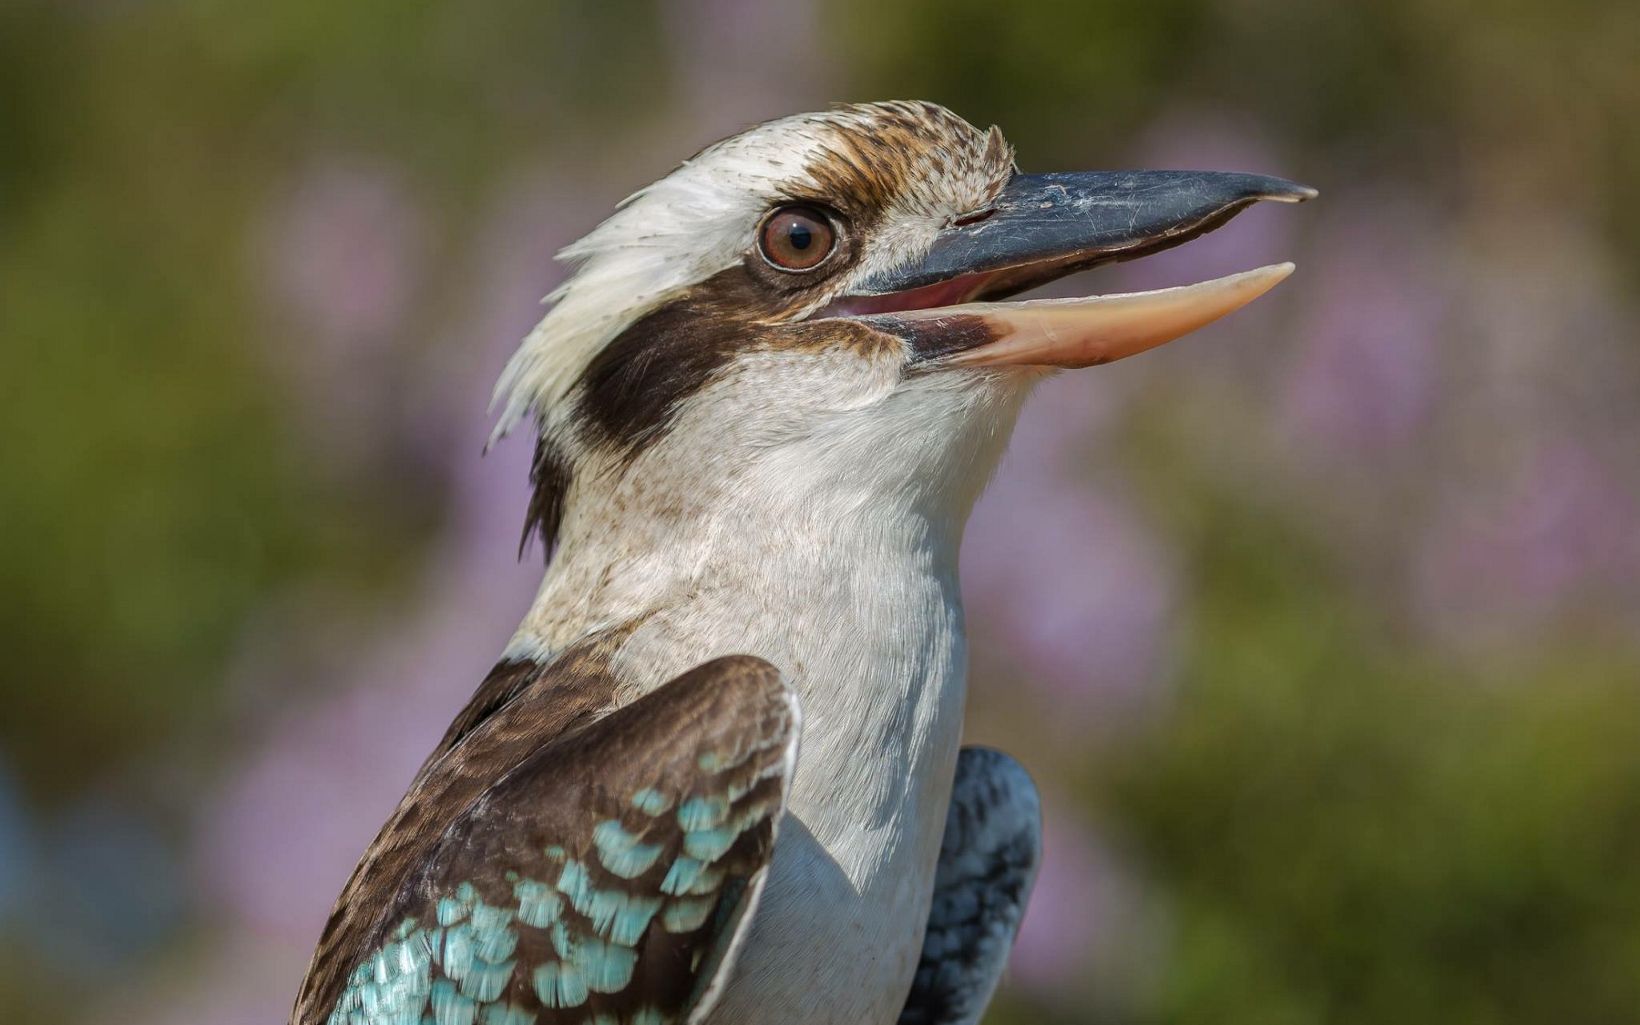 Kookaburras are terrestrial tree kingfishers